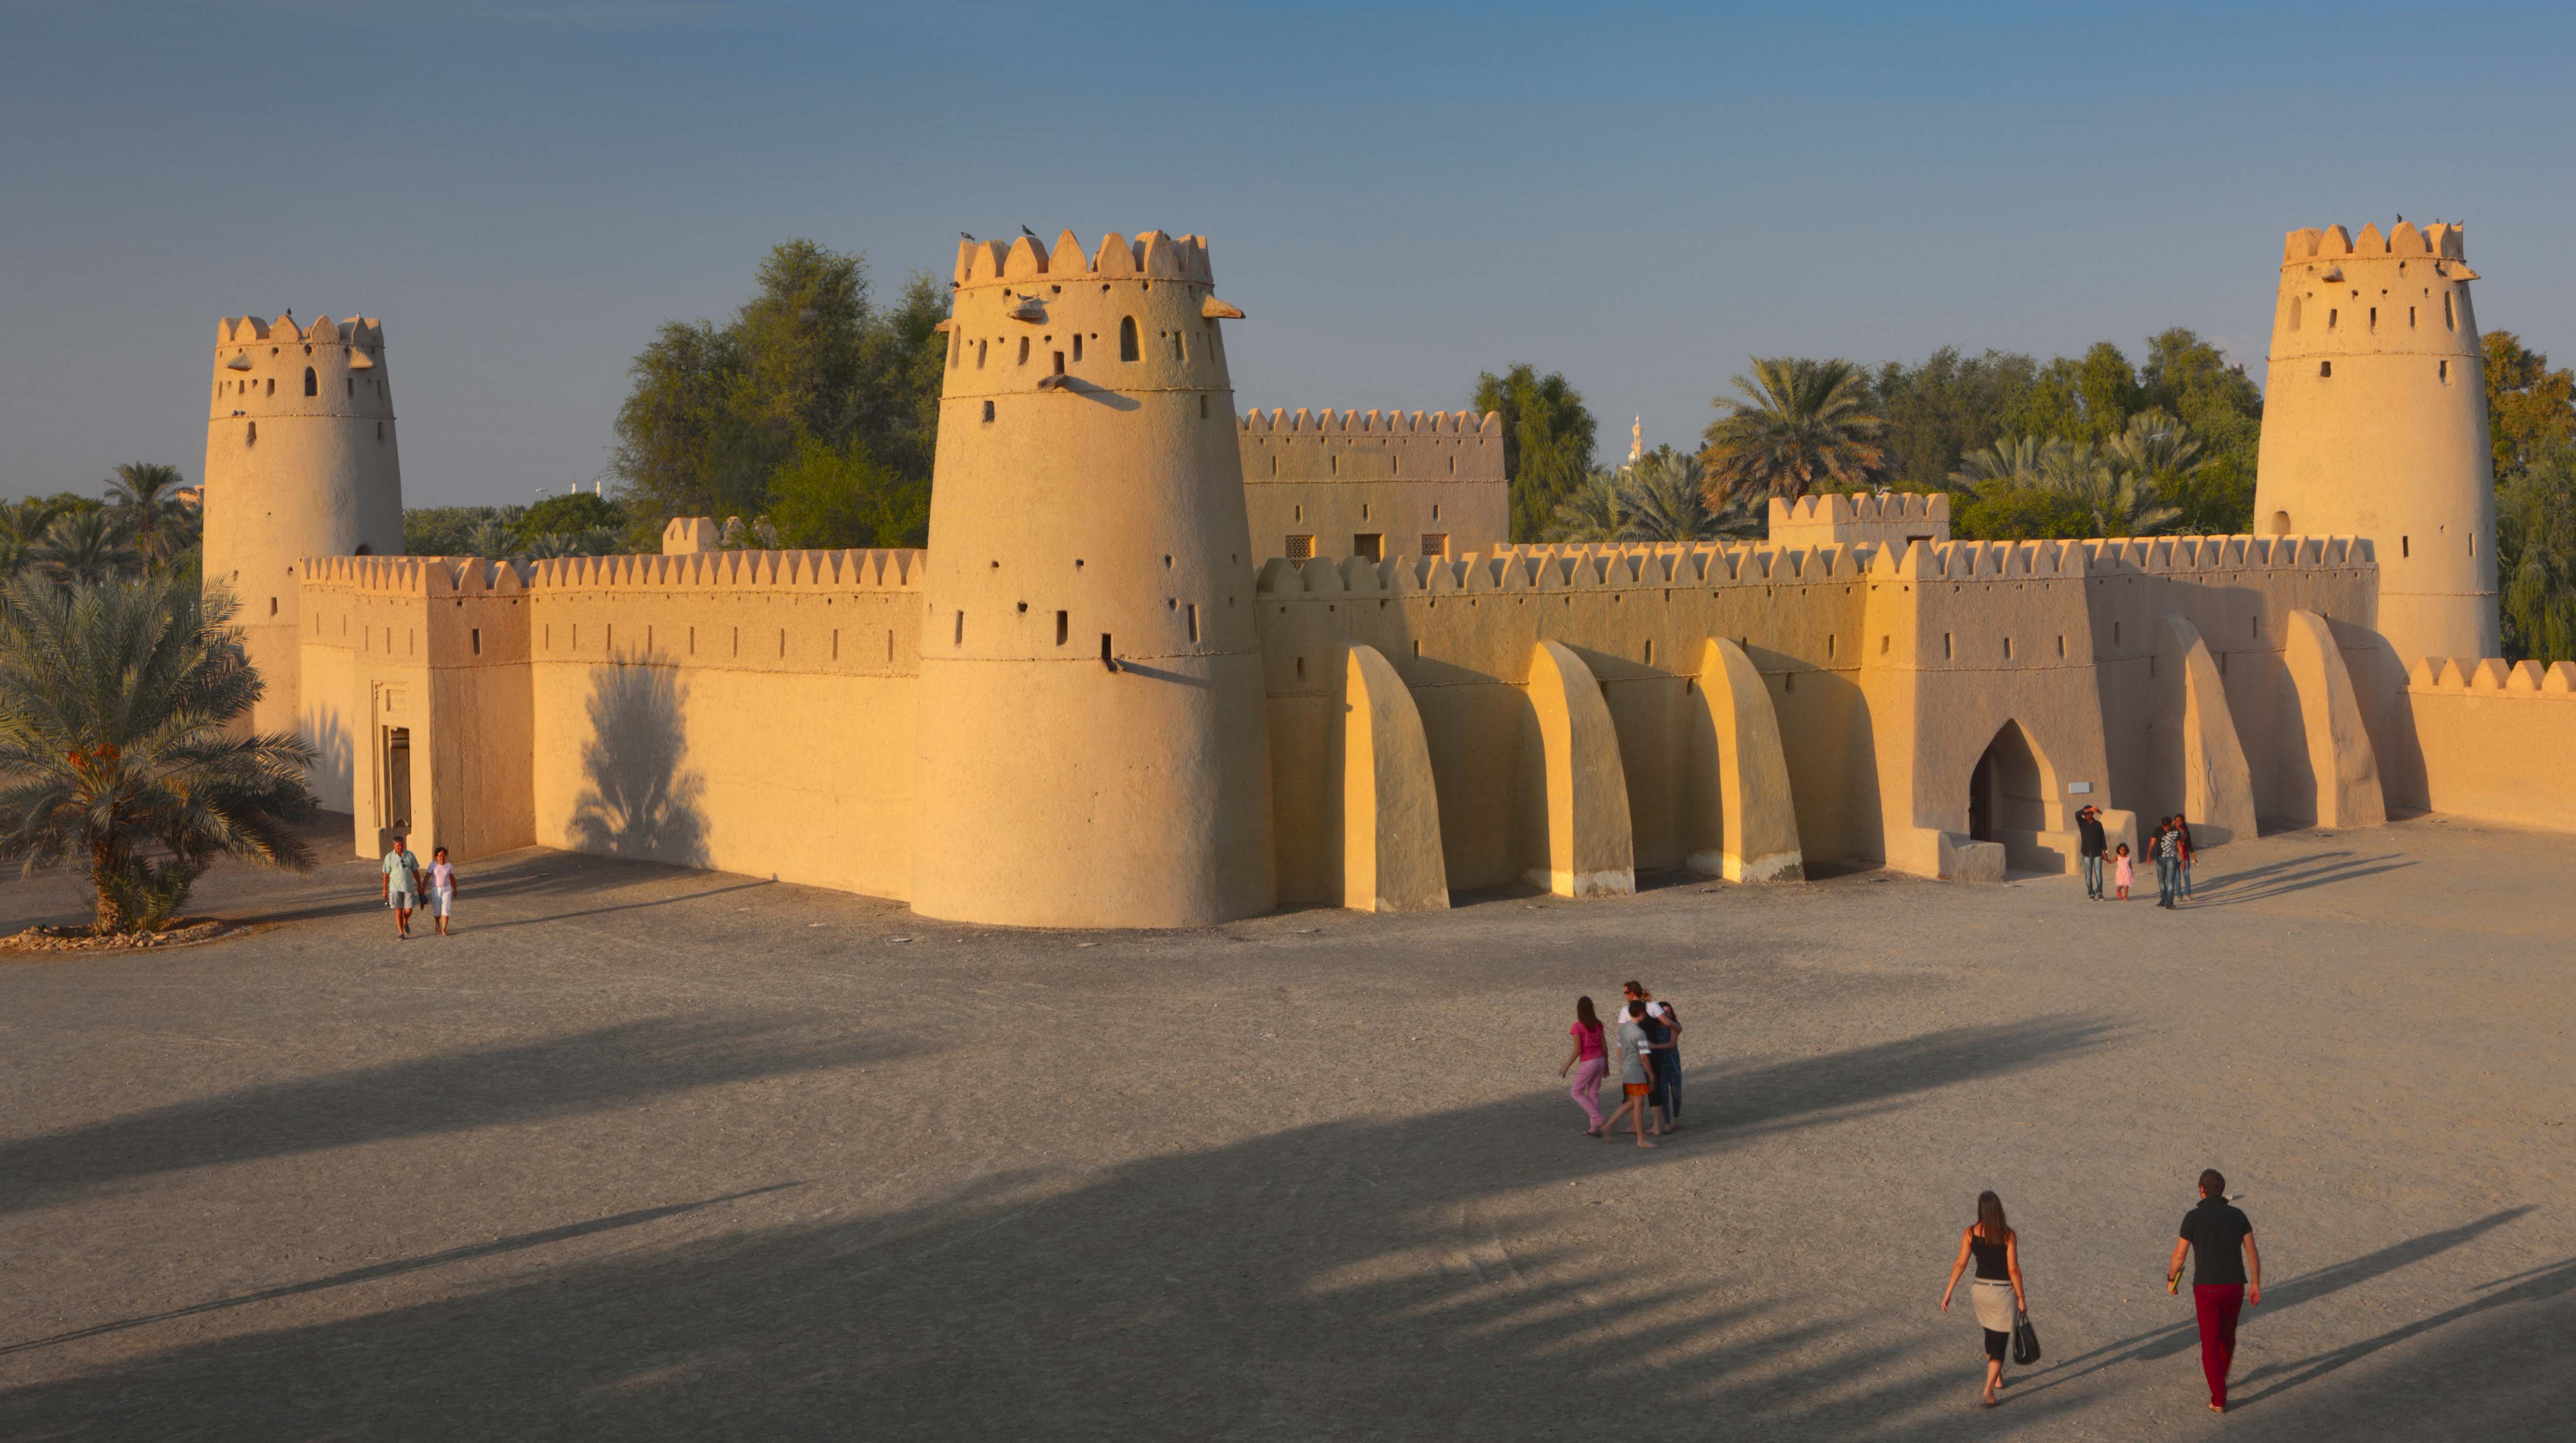 2.  Visitate l’Al Jahili Fort